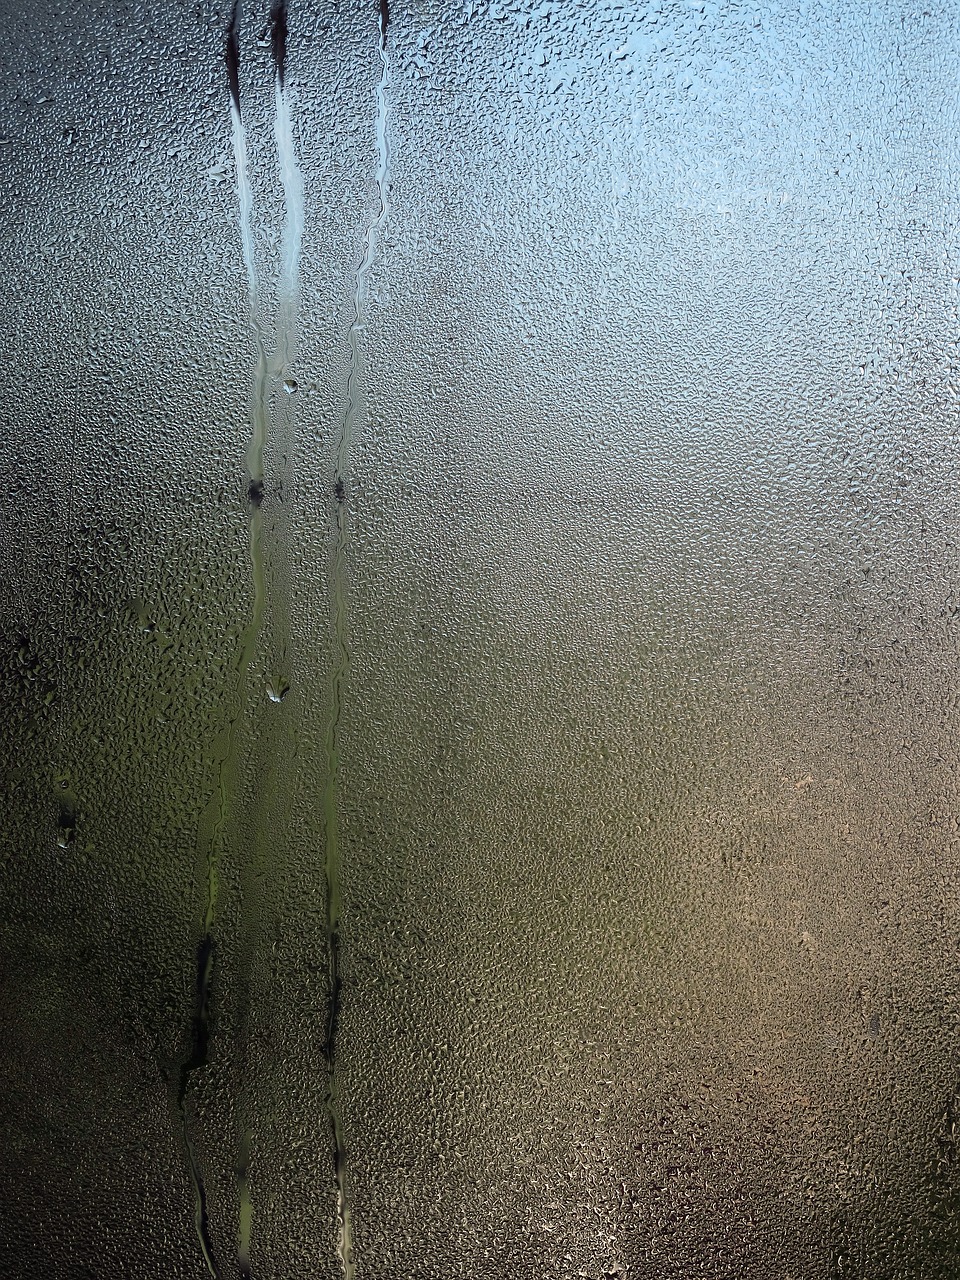 glass drop of water fogging free photo